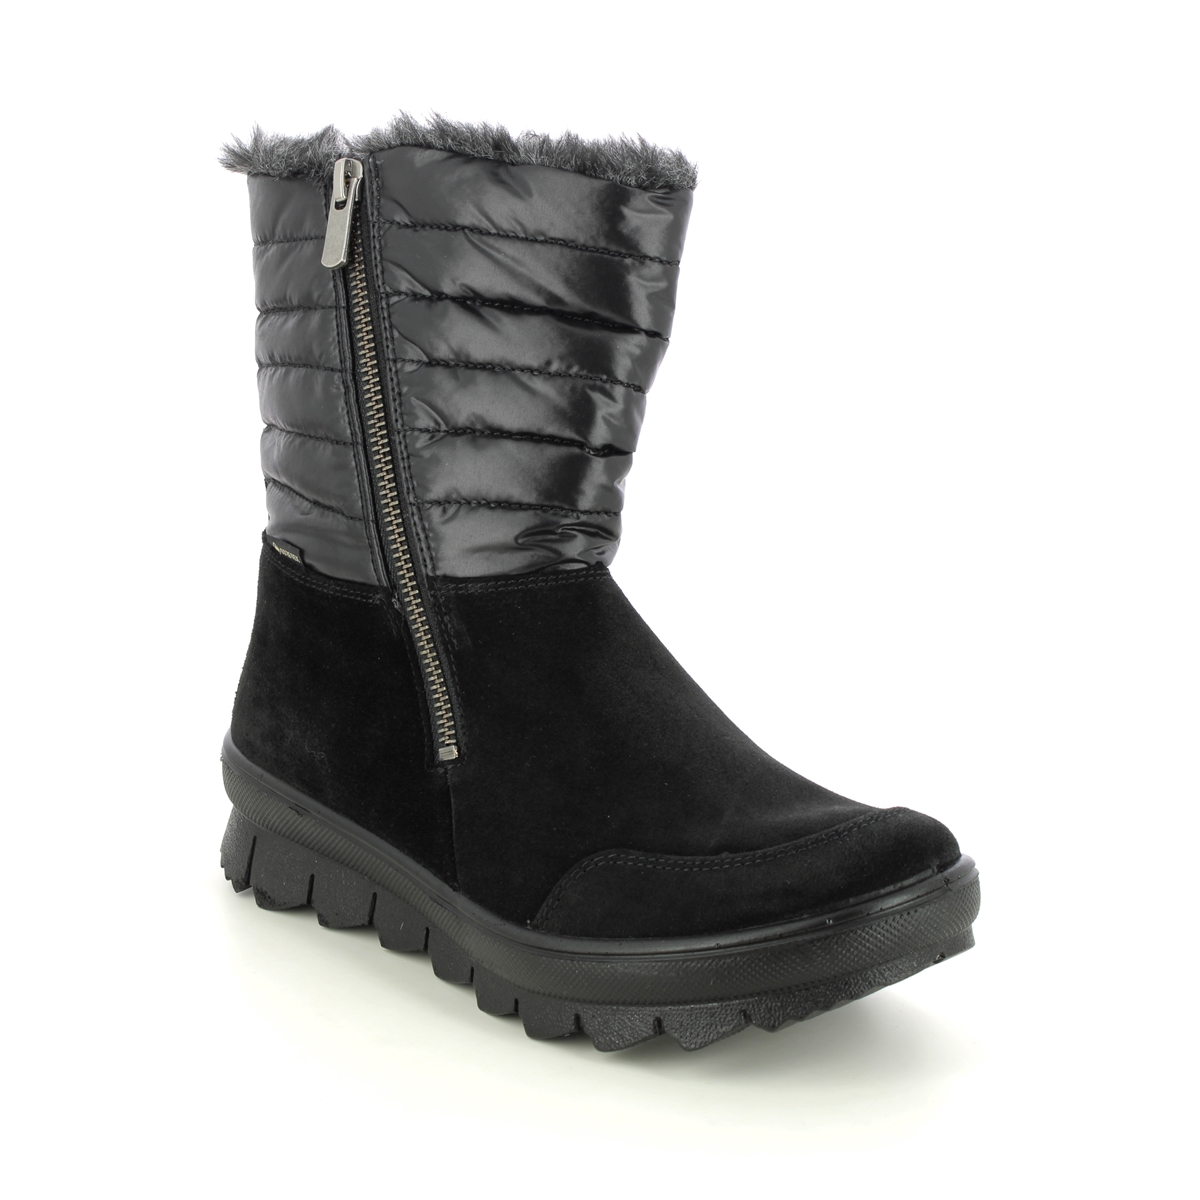 Legero Novara Zip Gtx Black Suede Womens Mid Calf Boots 2009900-0000 In Size 4 In Plain Black Suede